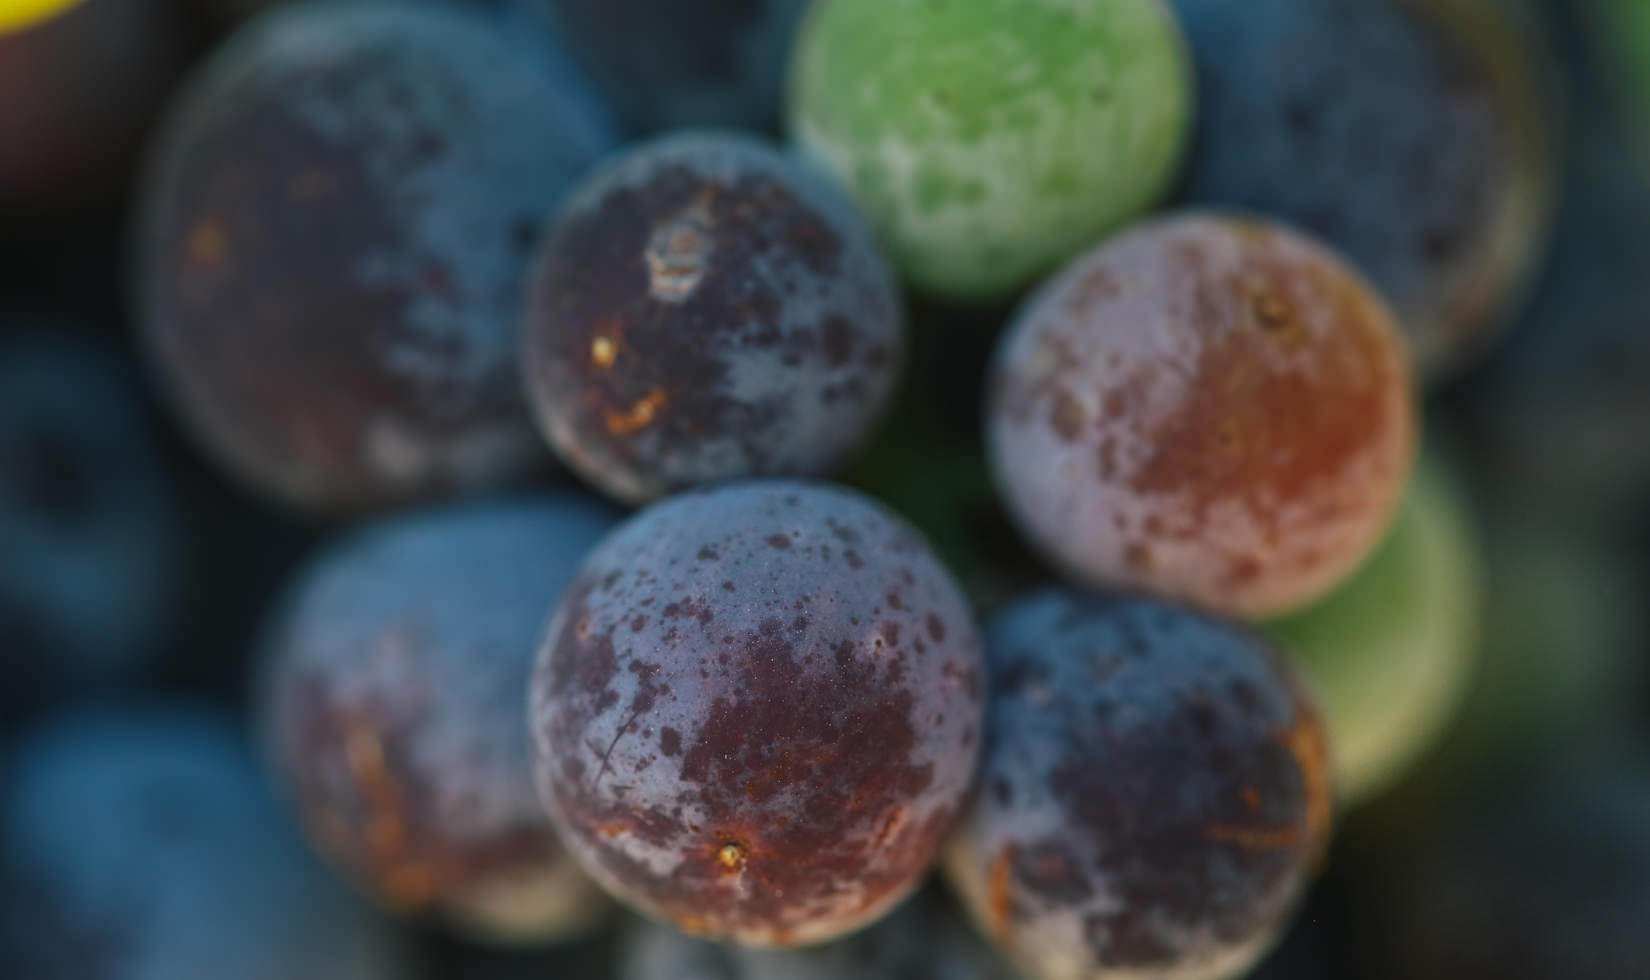 Munselle Vineyards merlot grapes changing color on the vine (veraison).